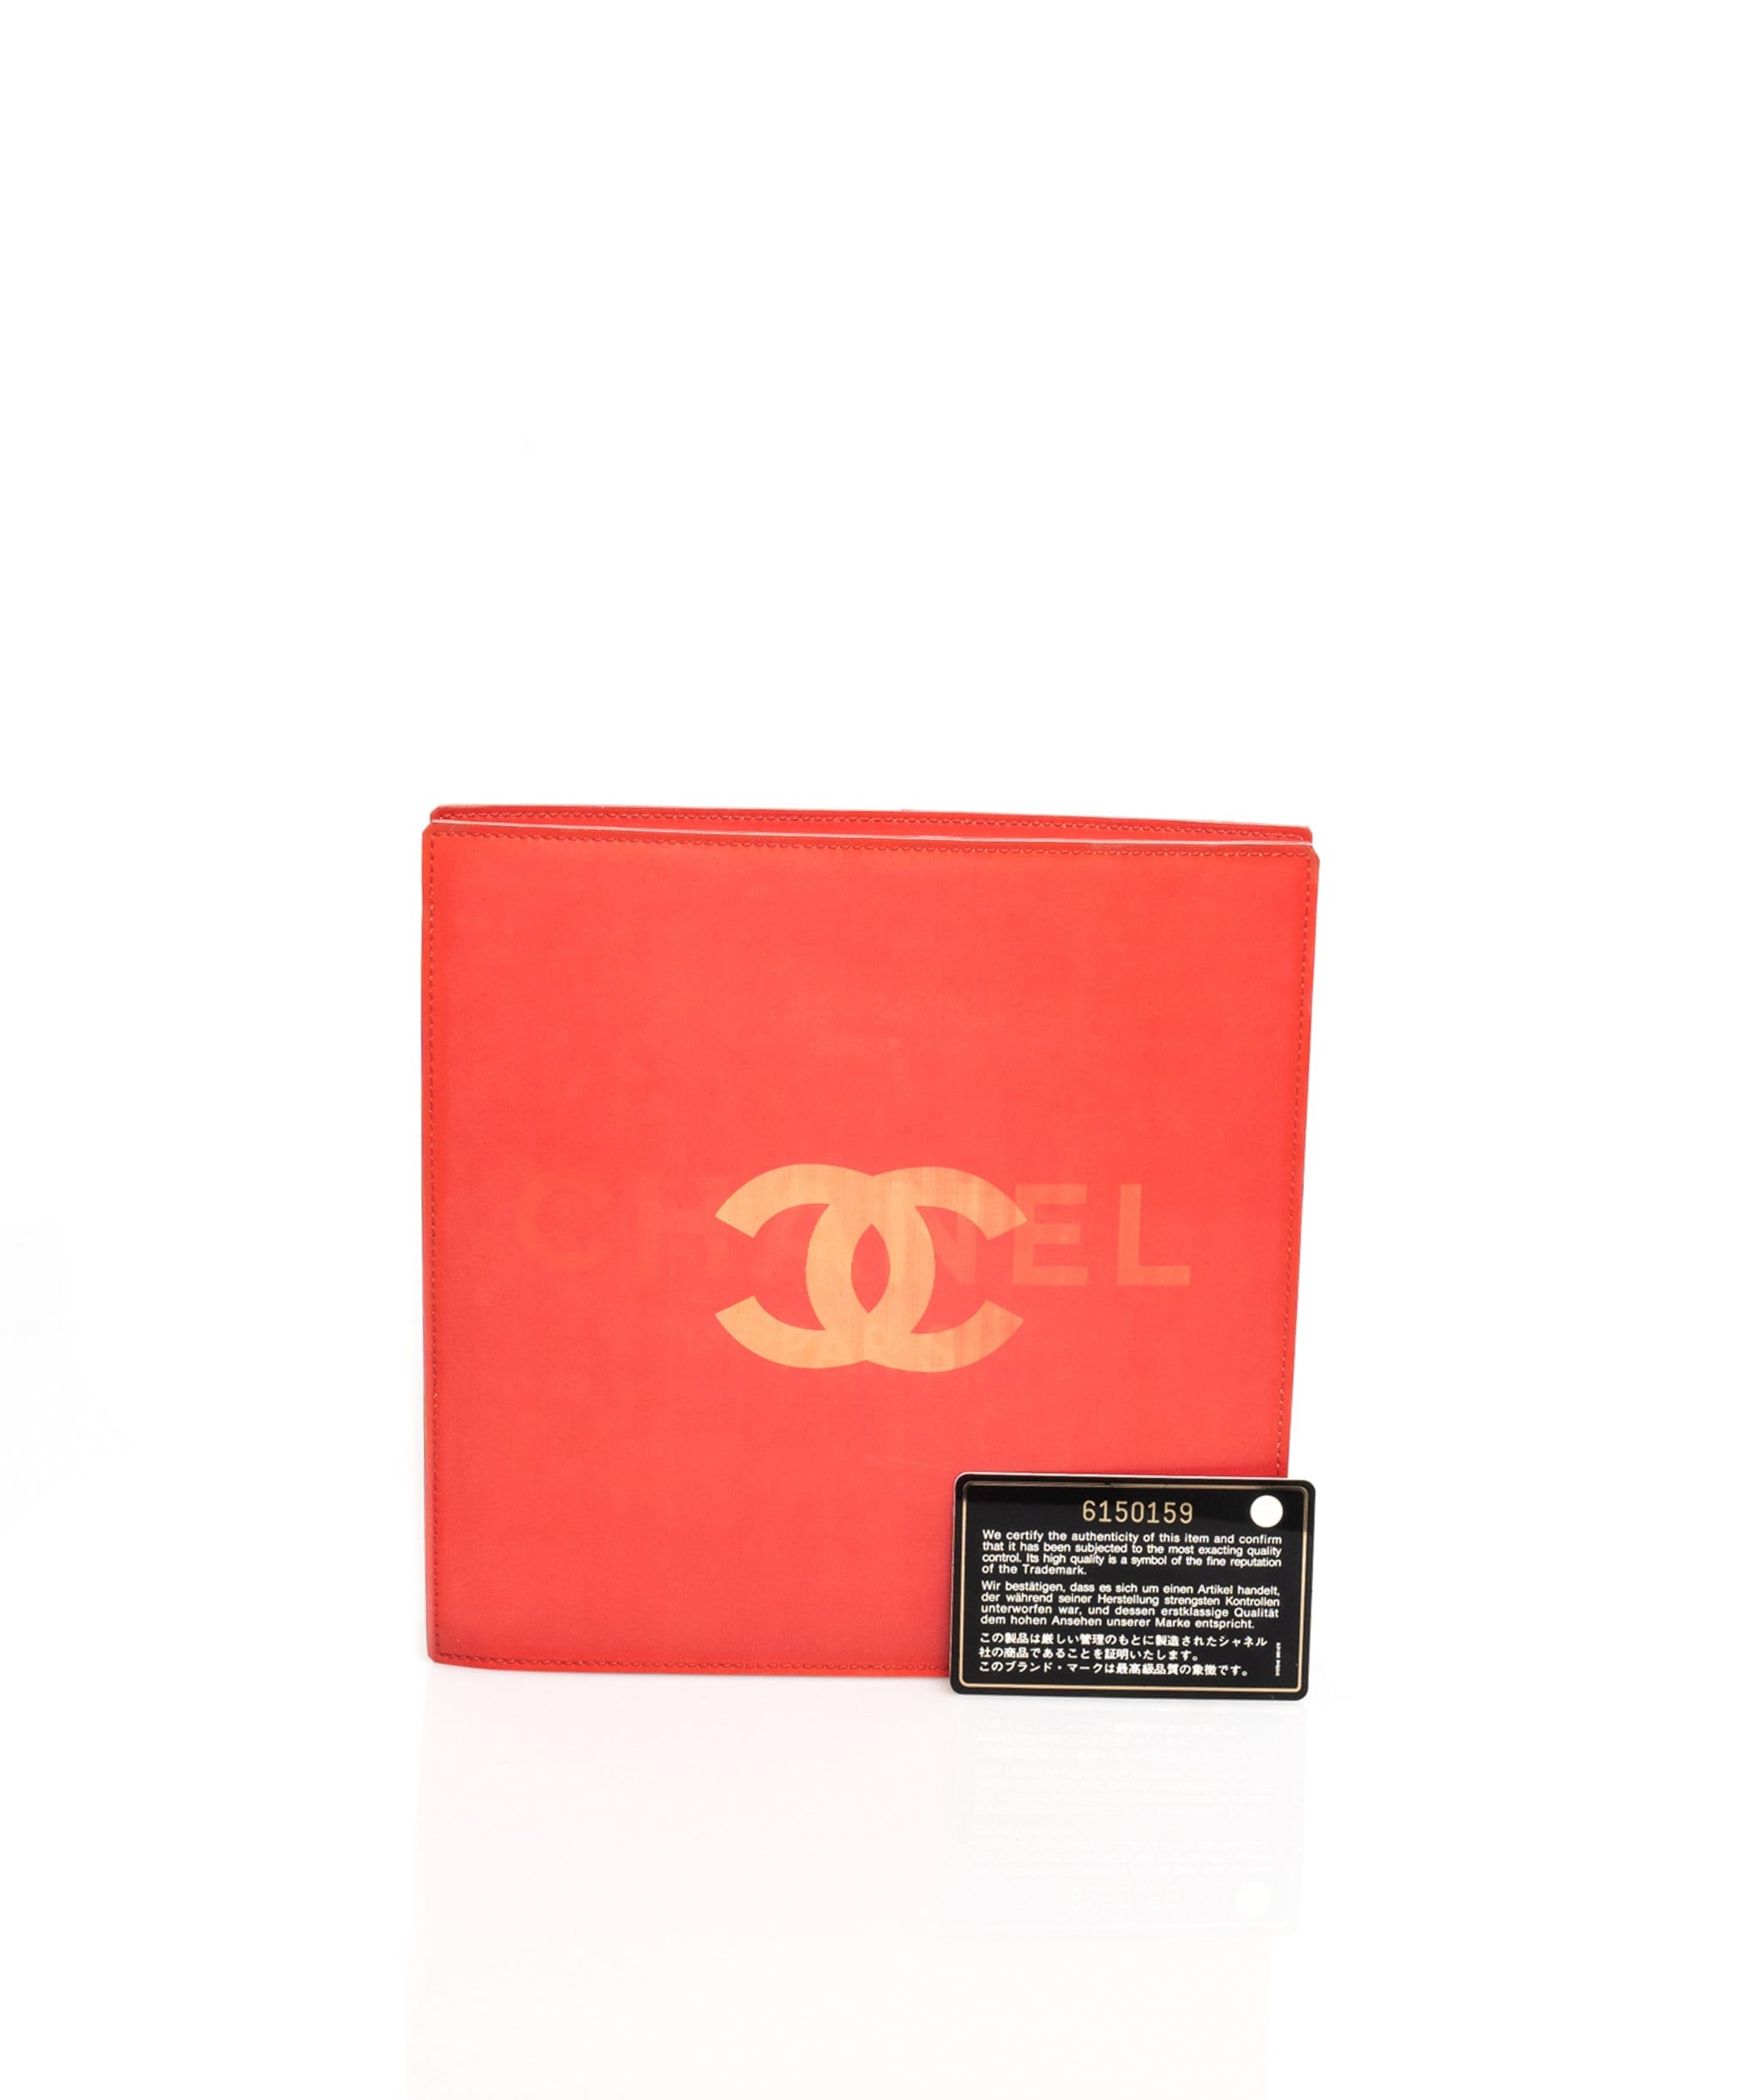 Chanel Chanel Vintage CC Hologram Small Tote Bag - AWL1614